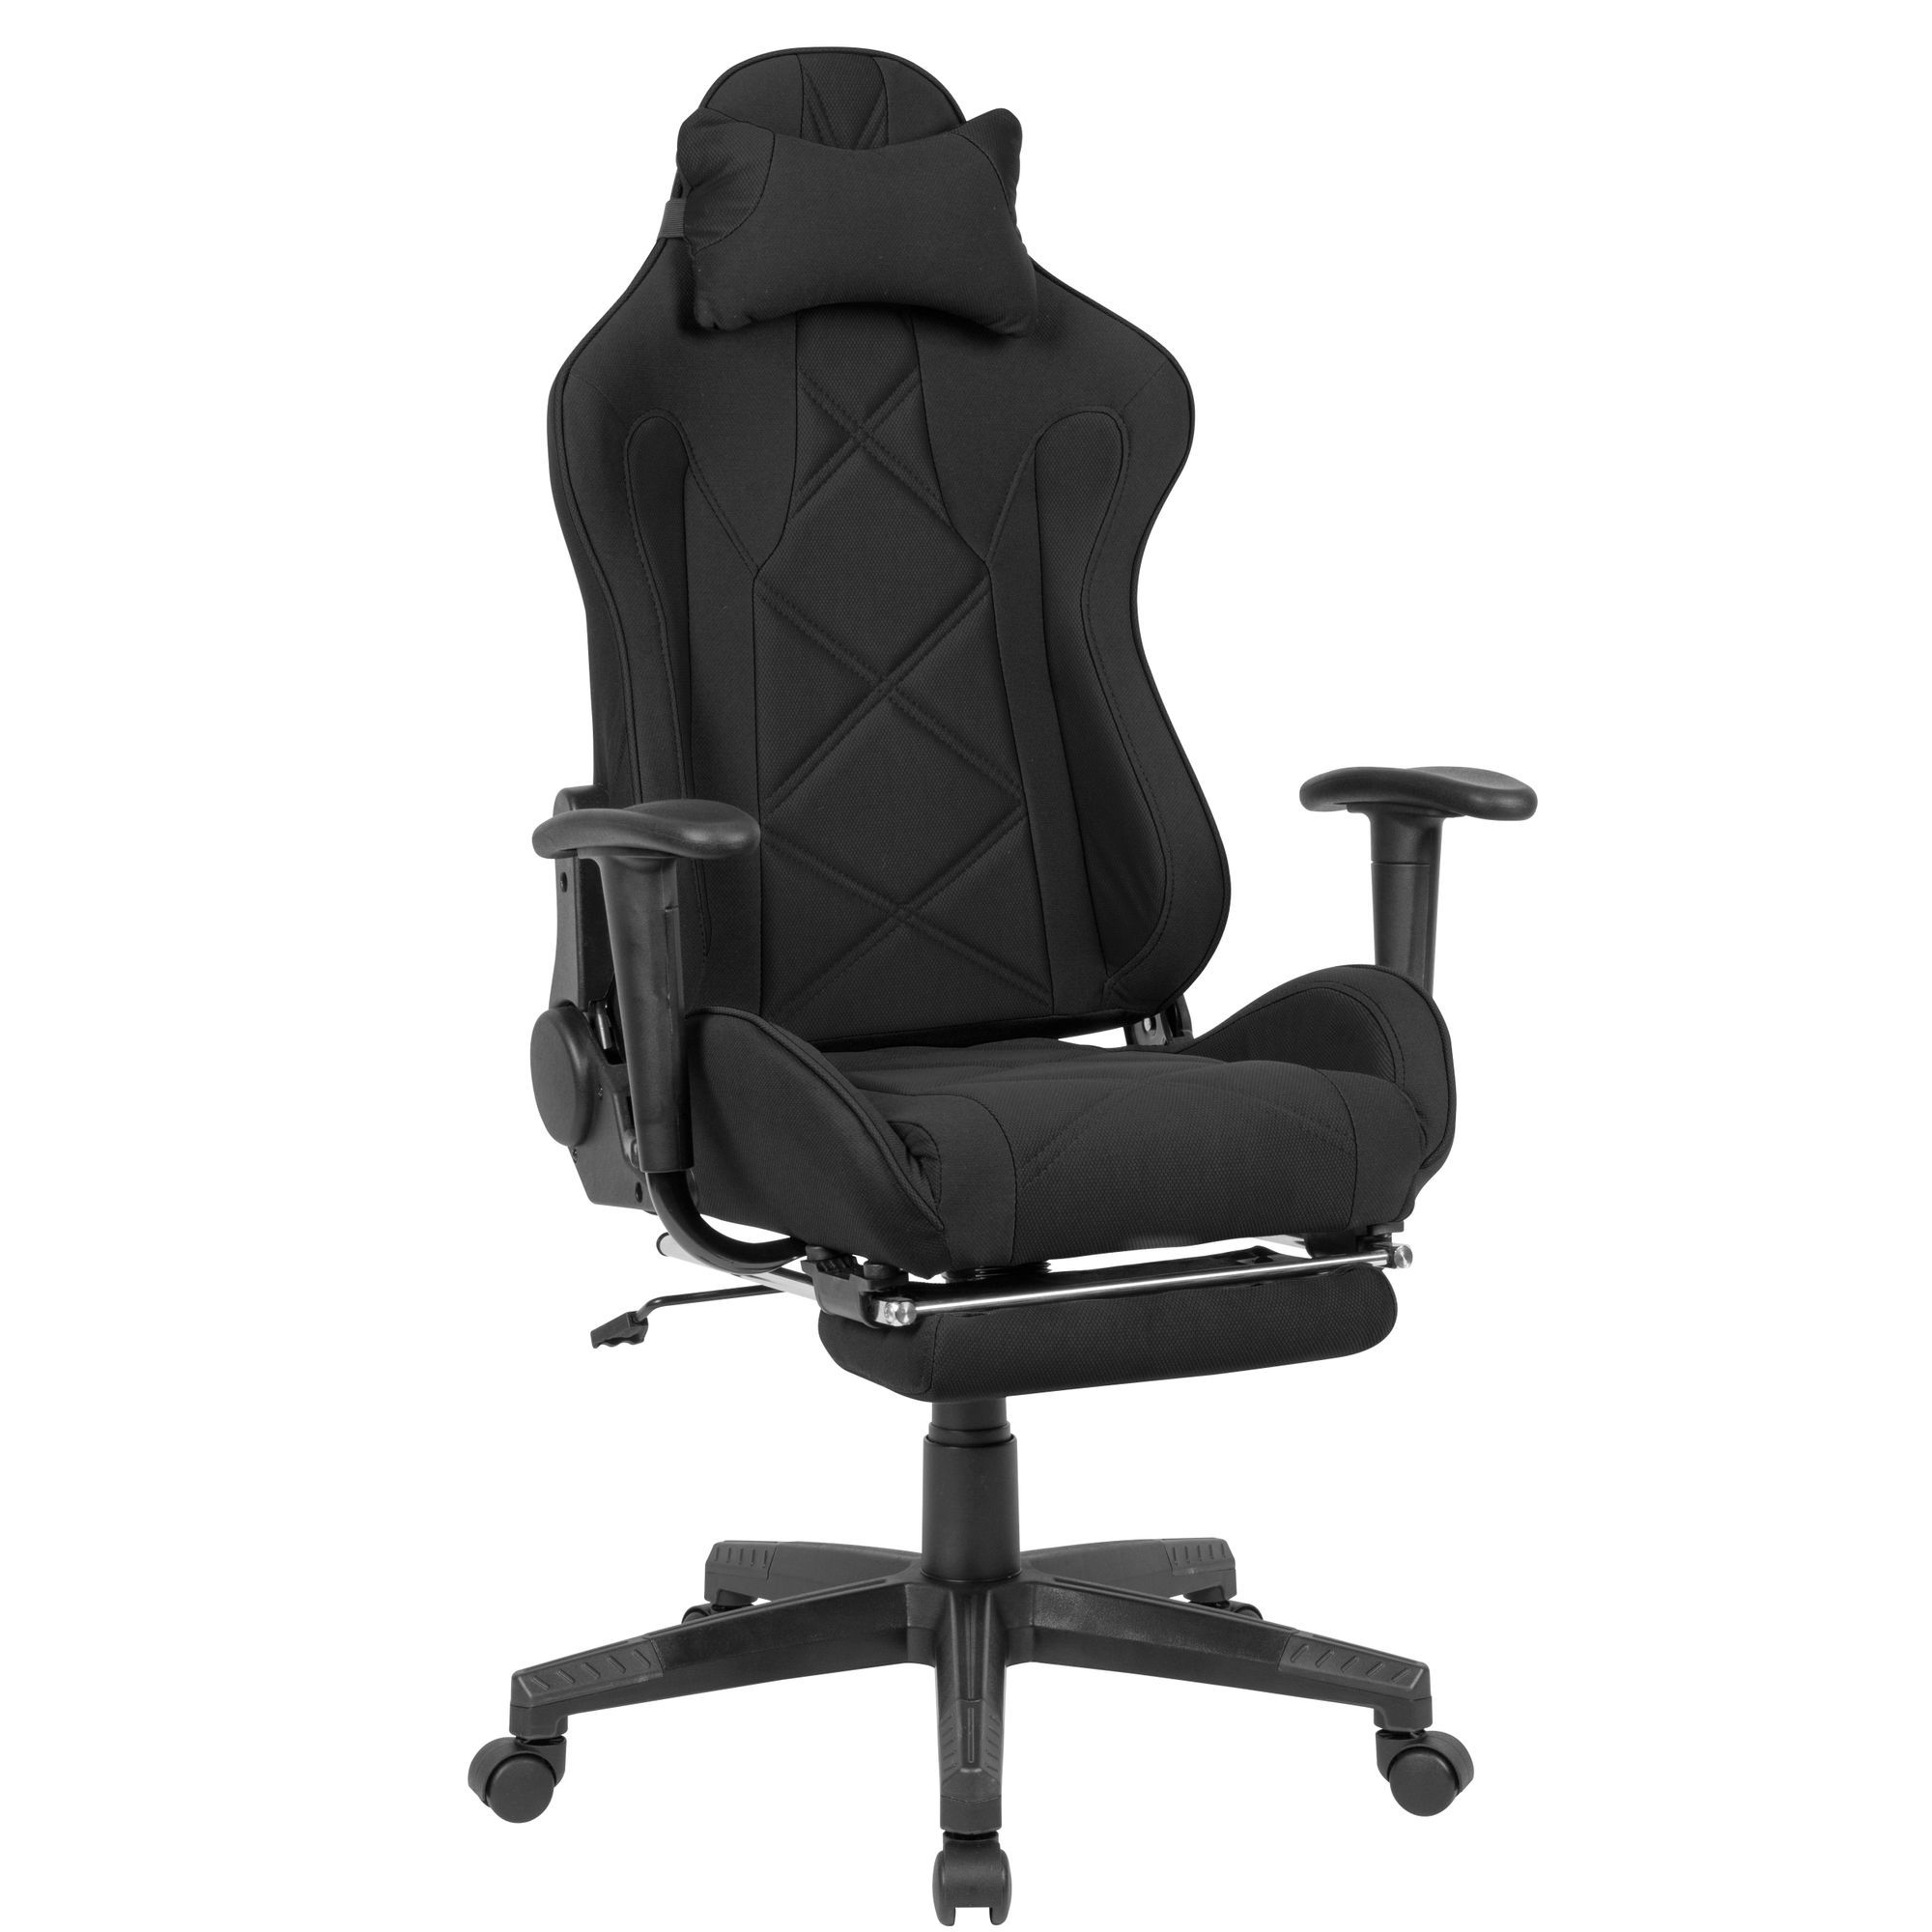 Chaise gamer / fauteuil de bureau SPM1.417